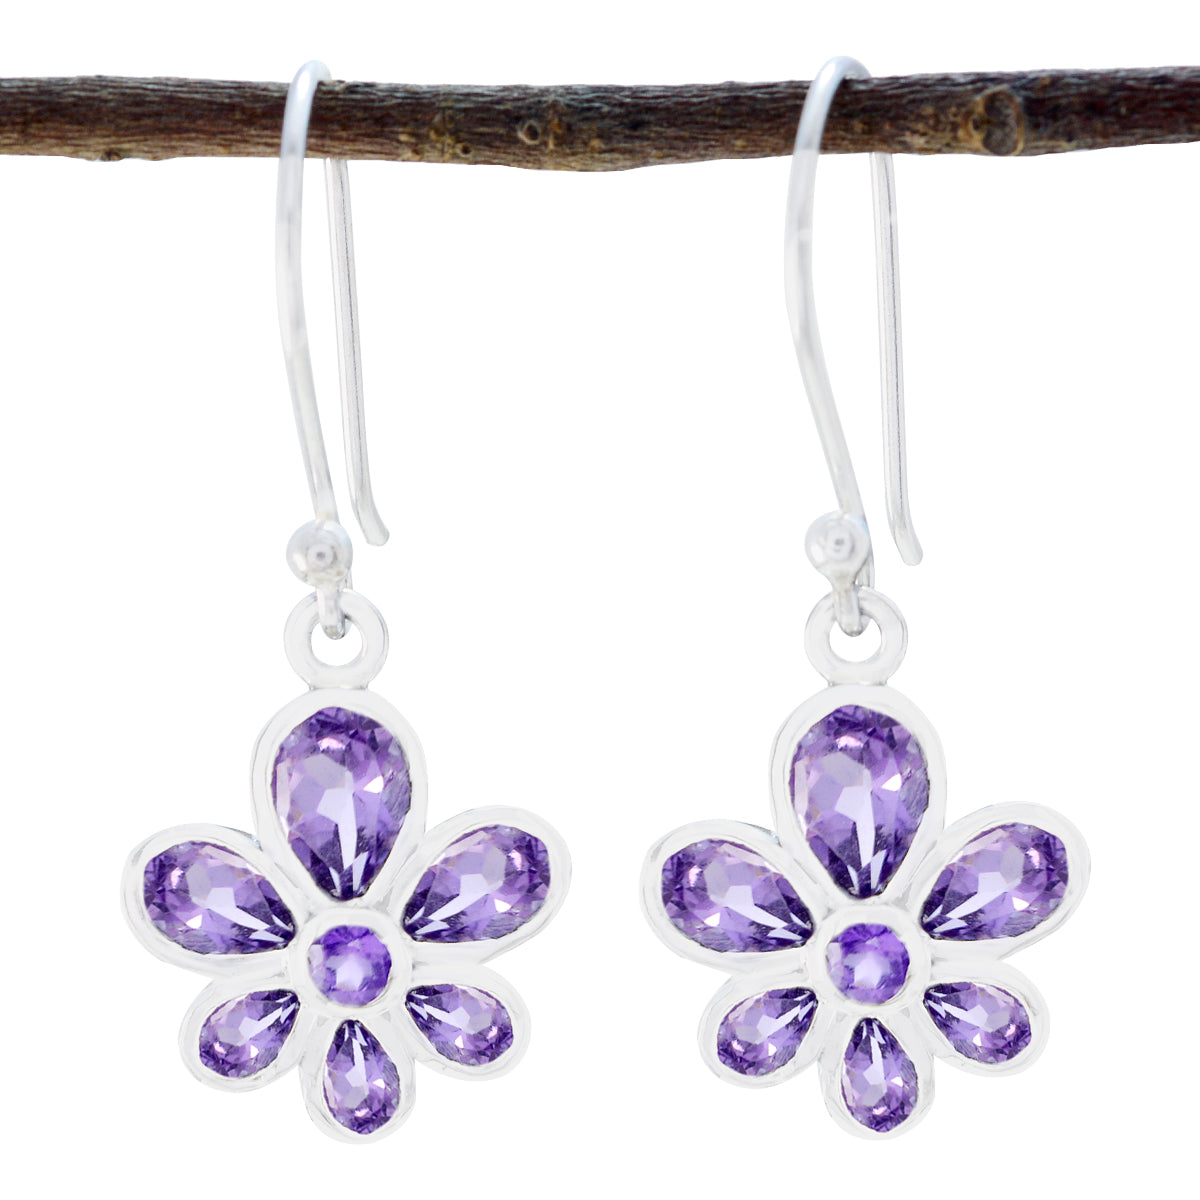 Riyo Natural Gemstone multi shape Faceted Purple Amethyst Silver Earrings cyber Monday gift